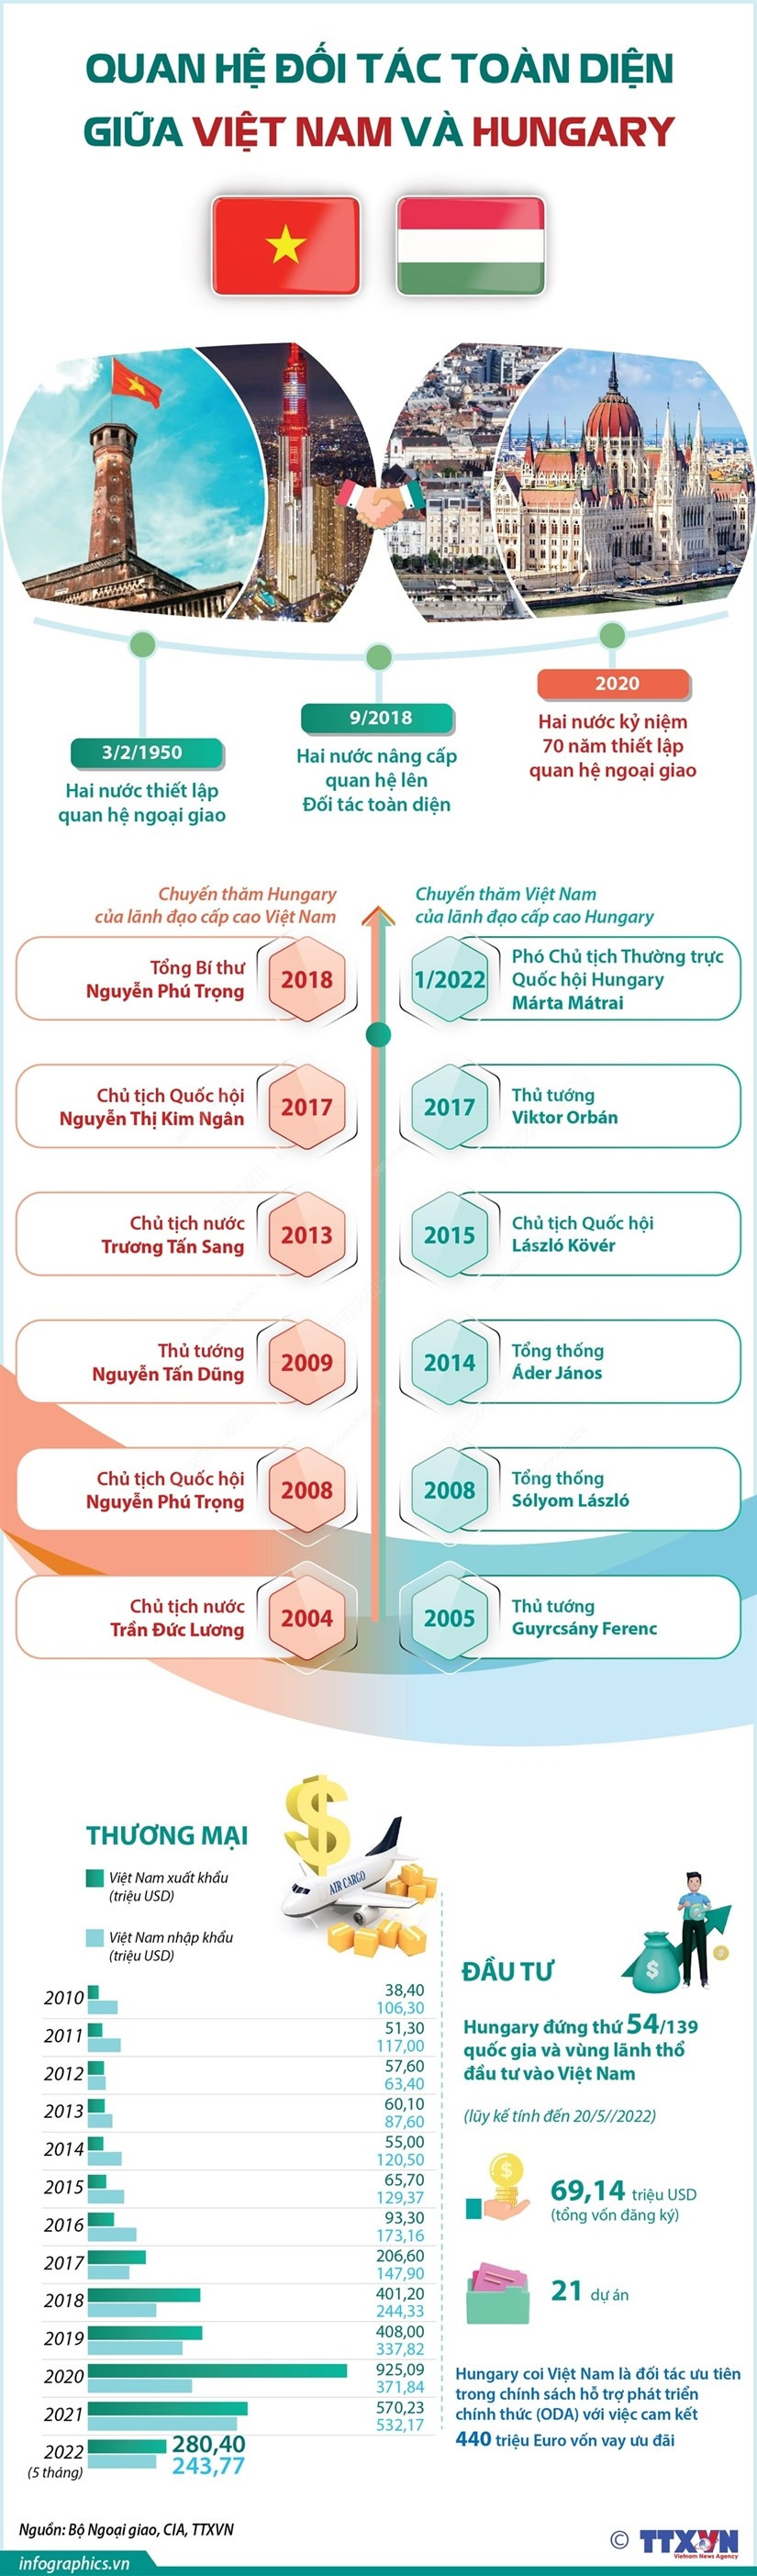 [Infographics] Quan he Doi tac toan dien giua Viet Nam va Hungary hinh anh 1